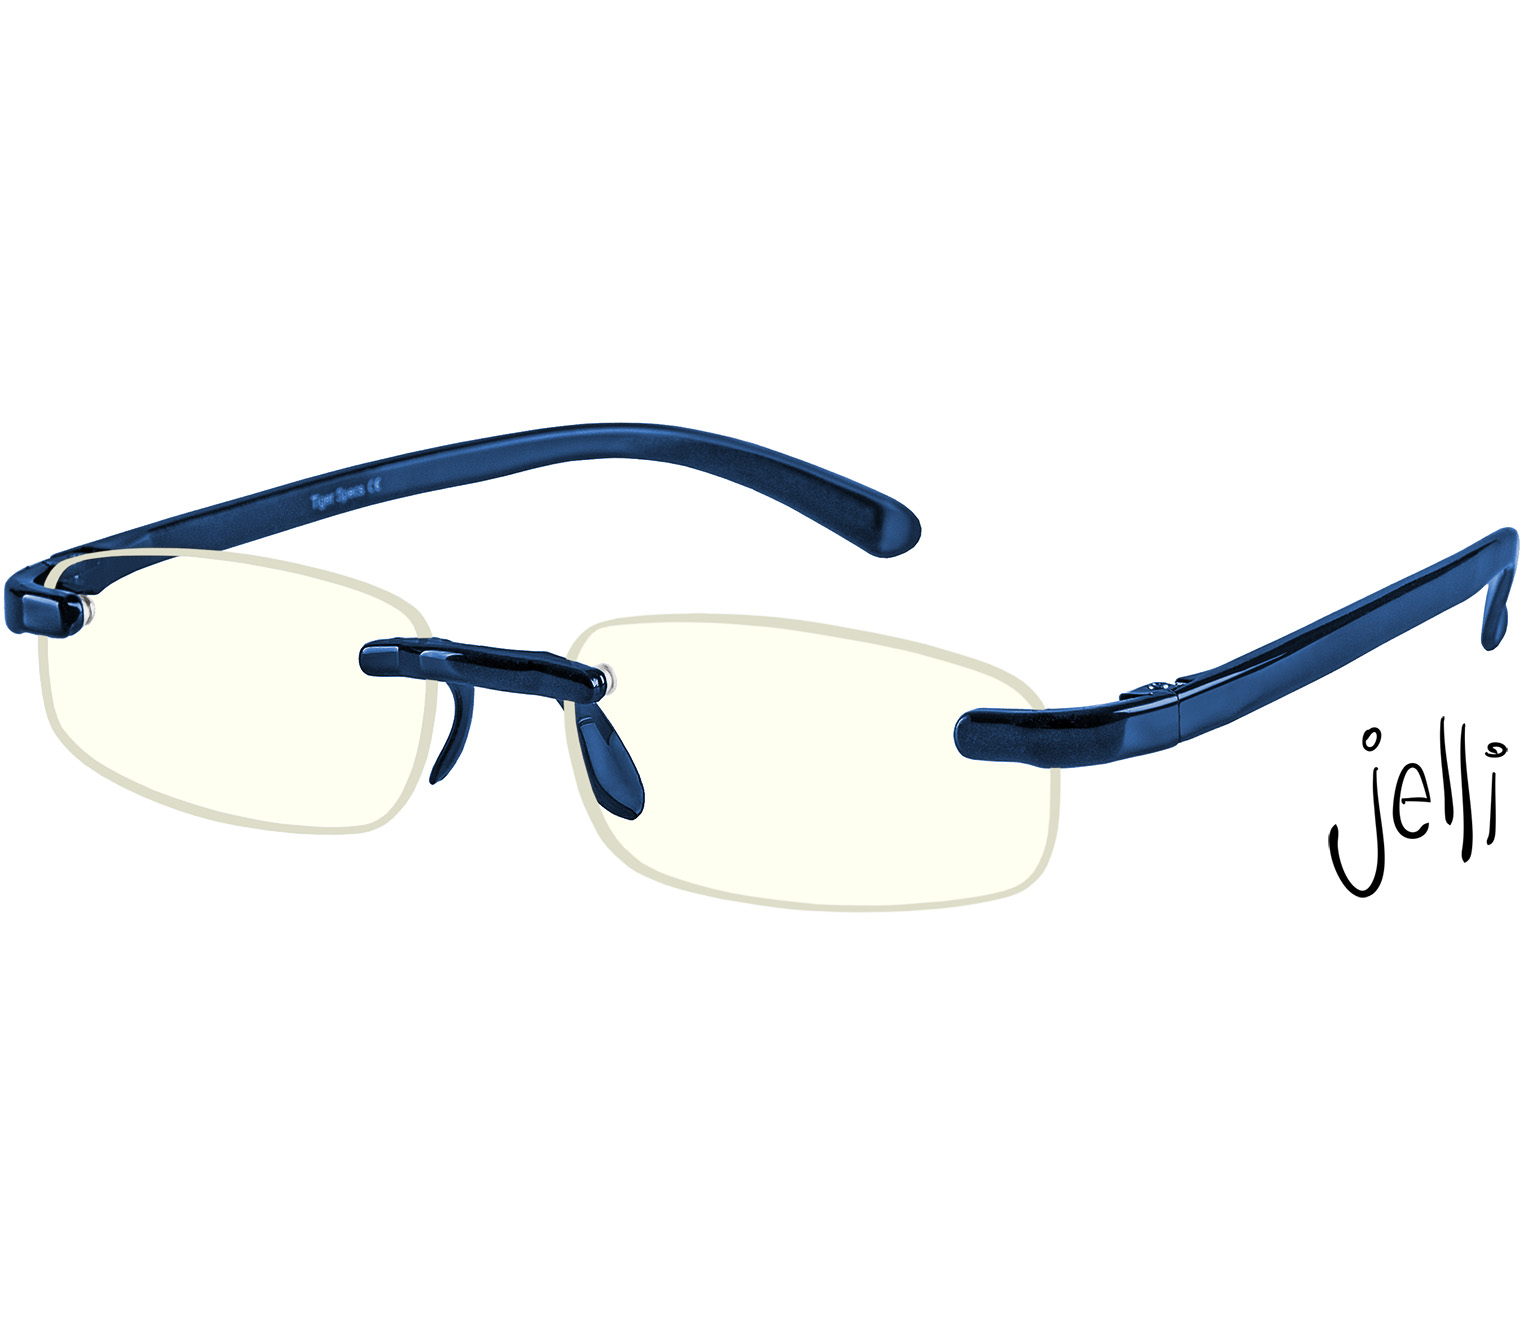 Main Image (Angle) - Jelli Digital (Blue) Blue Light Glasses Reading Glasses